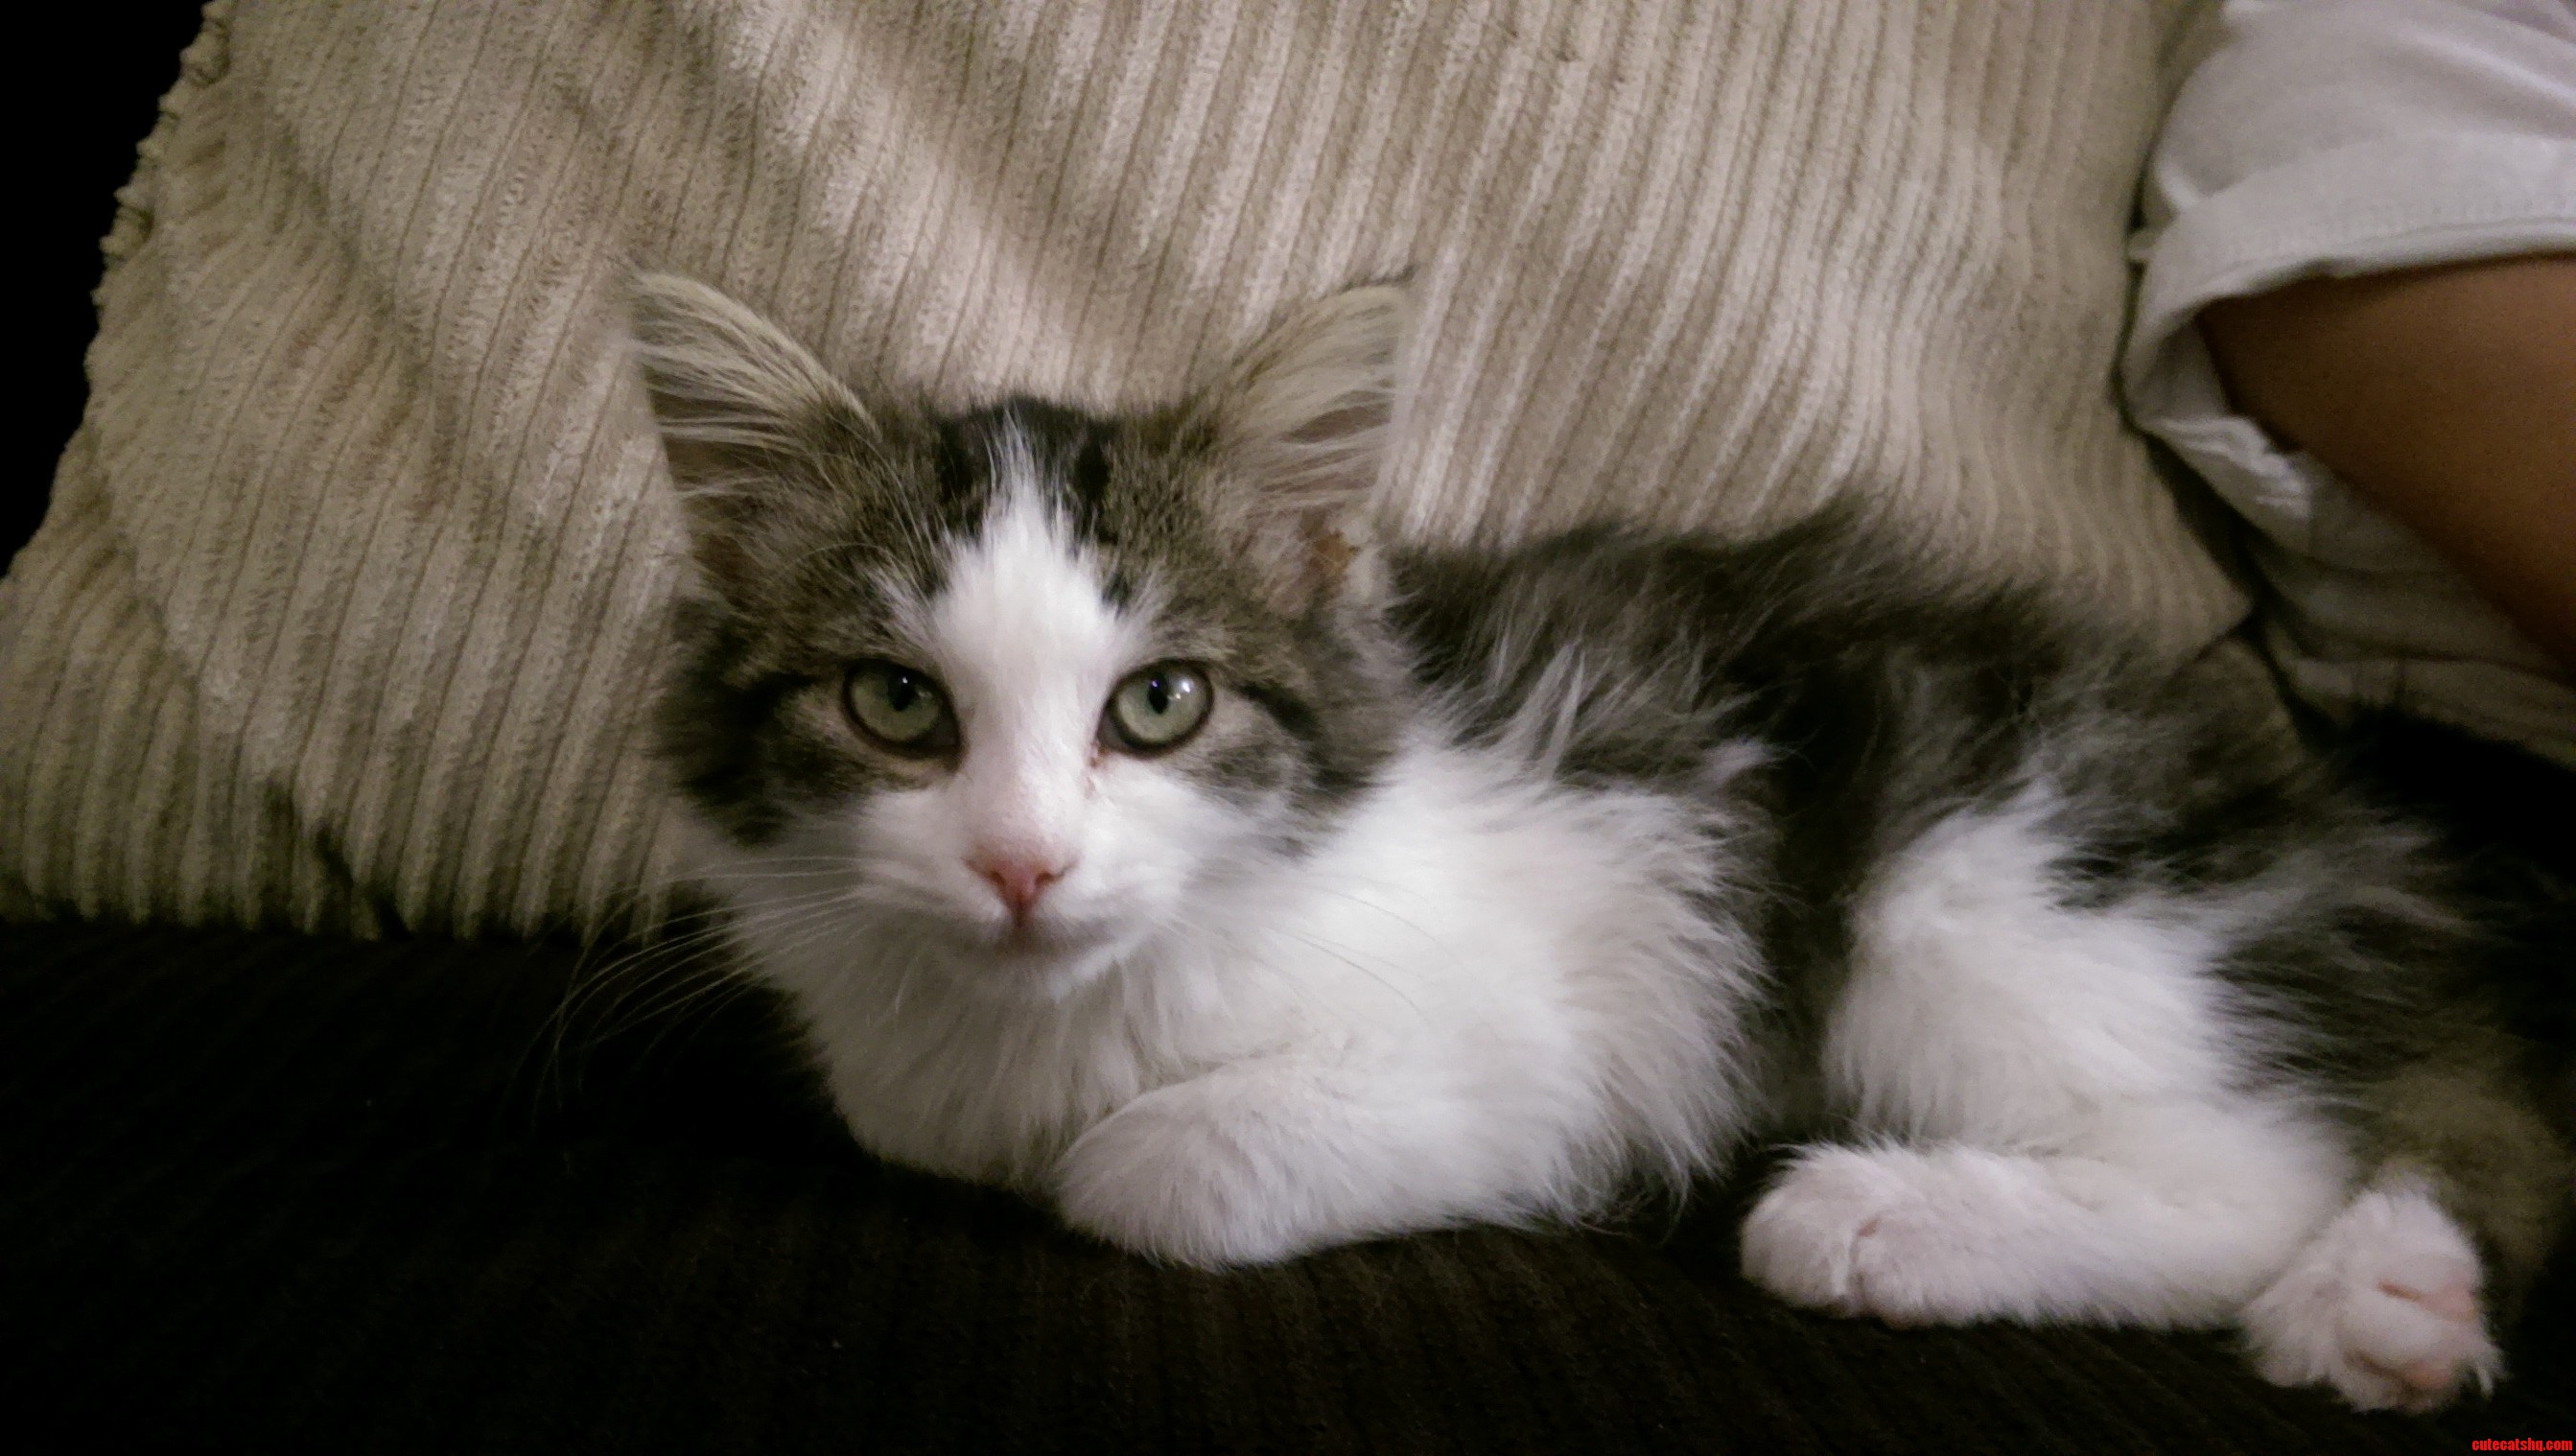 Our new kitten zelda